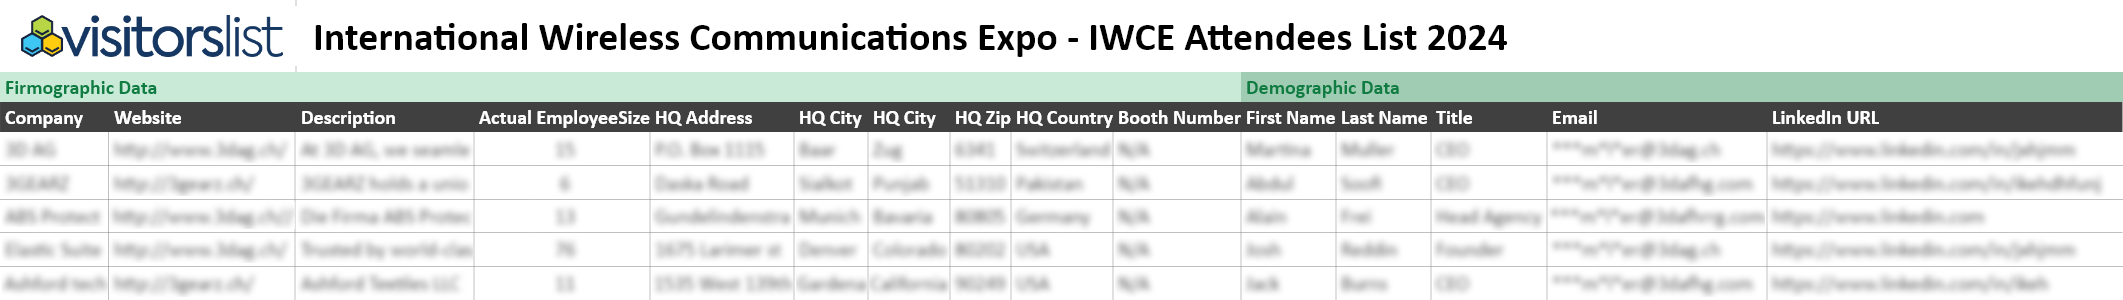 International Wireless Communications Expo Attendees List 2024